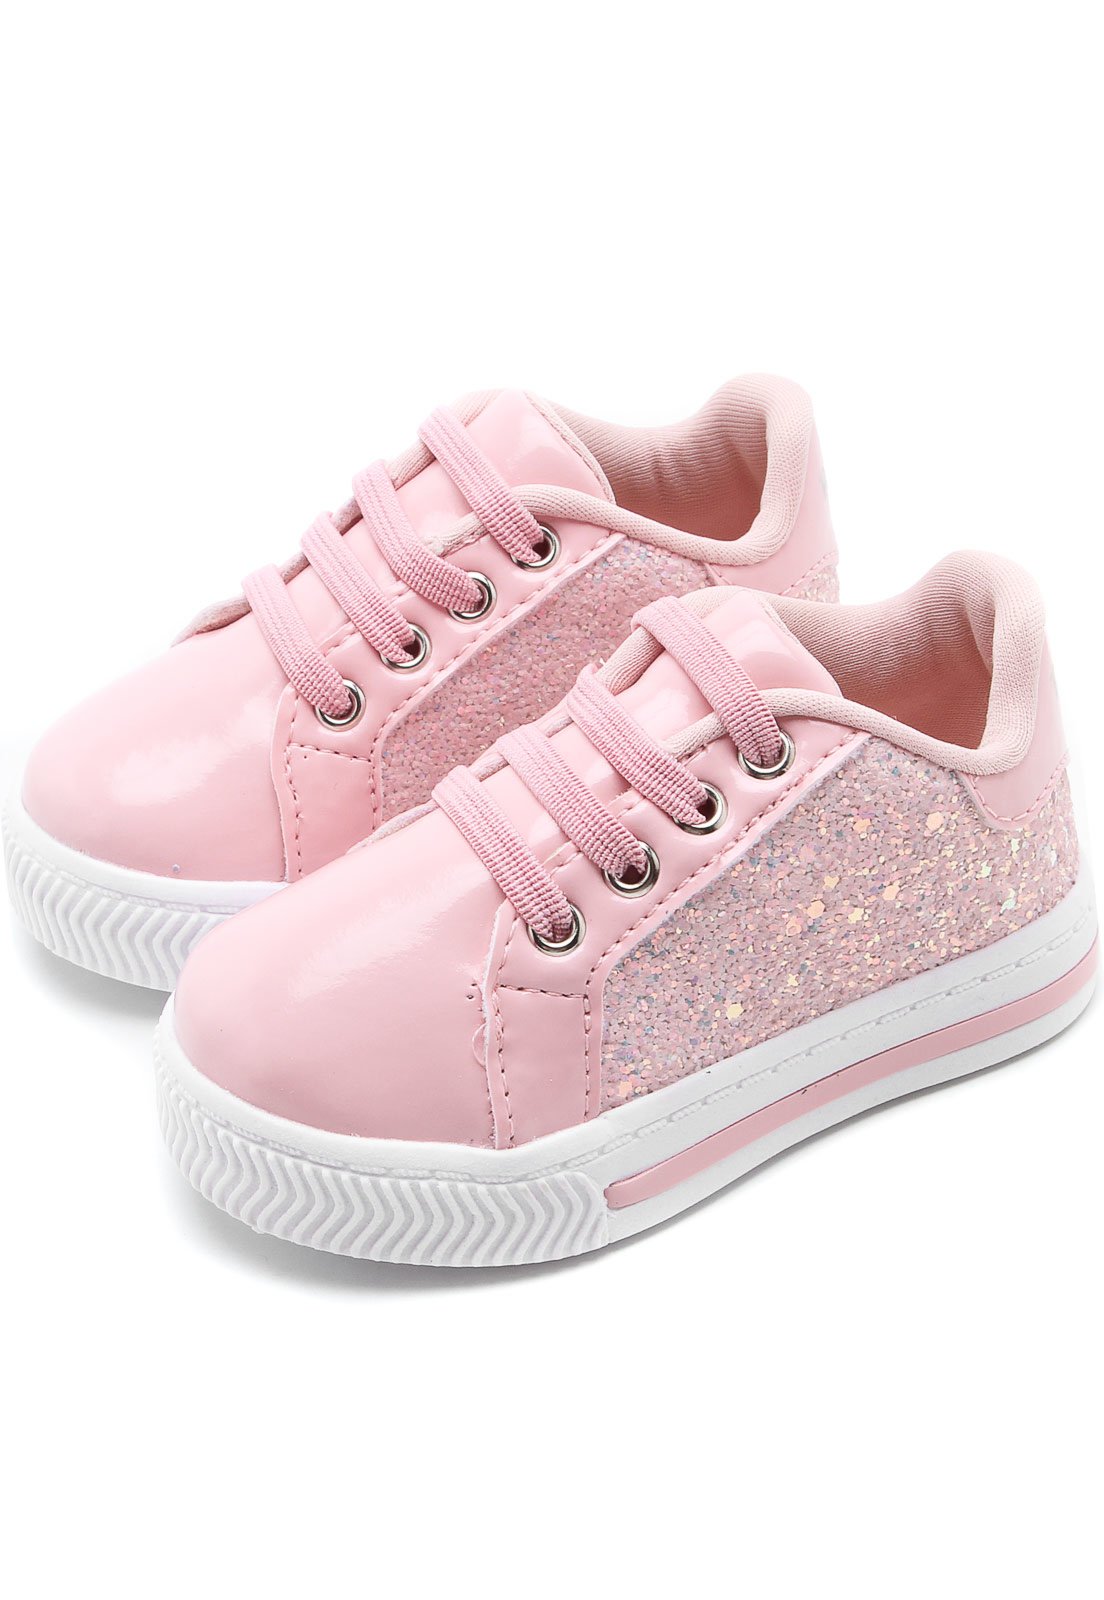 tênis rosa com glitter